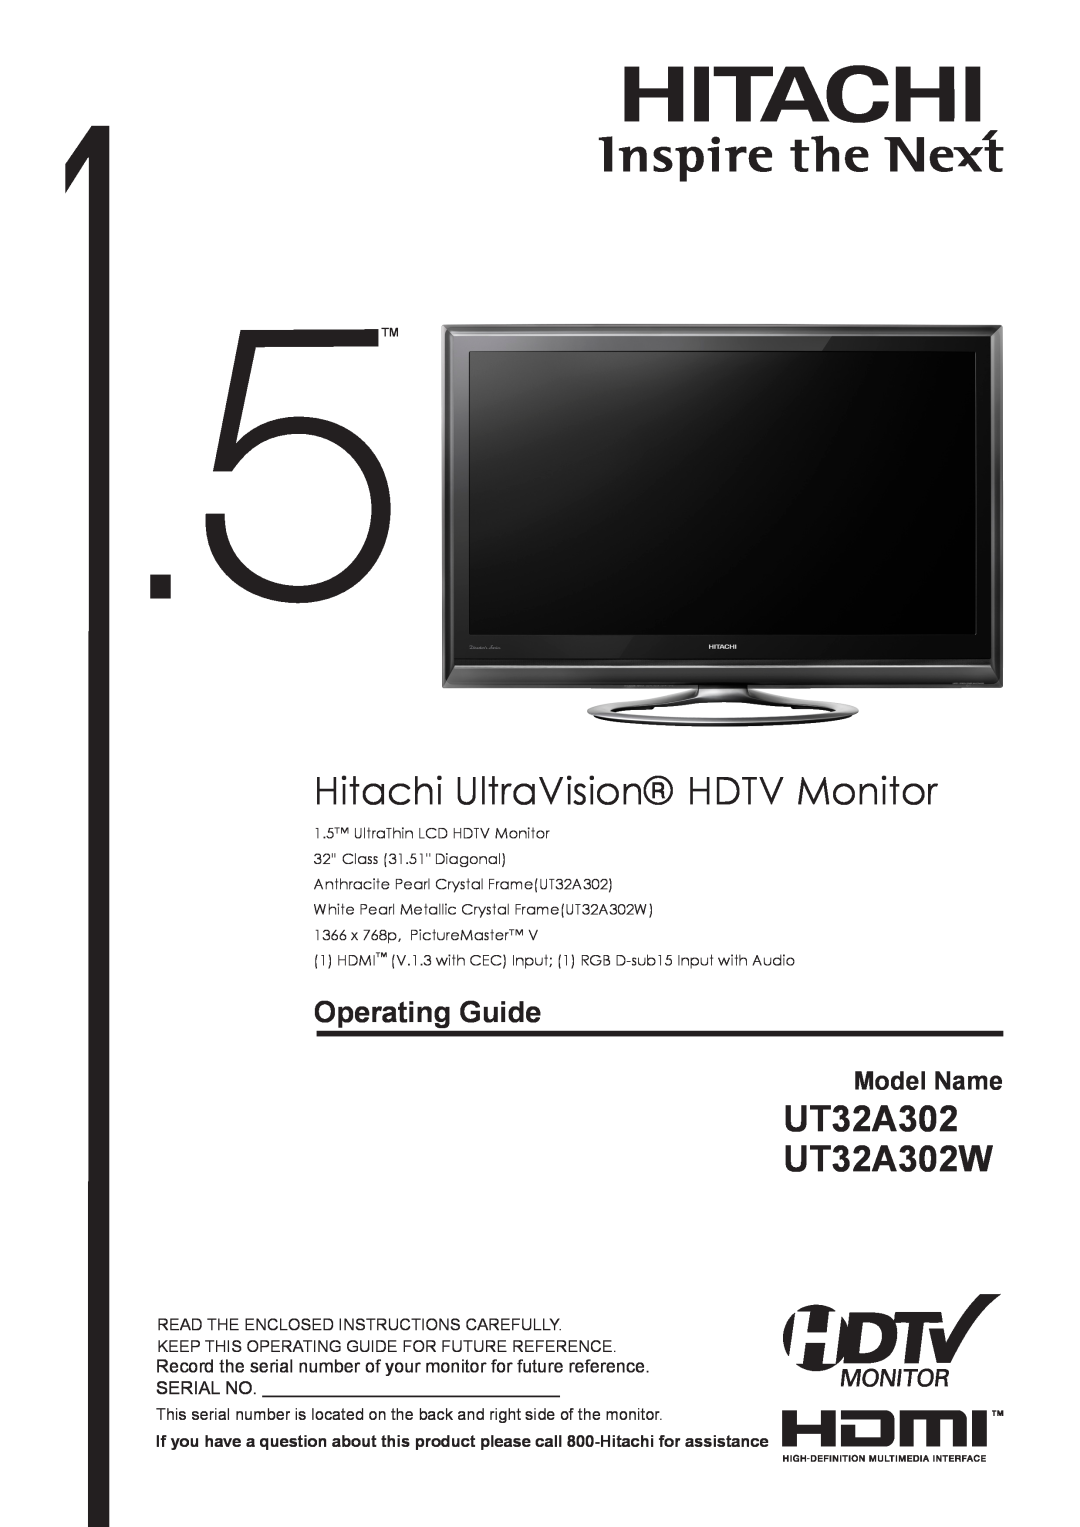 Hitachi manual Hitachi UltraVision HDTV Monitor, UT32A302 UT32A302W, Operating Guide, Model Name 